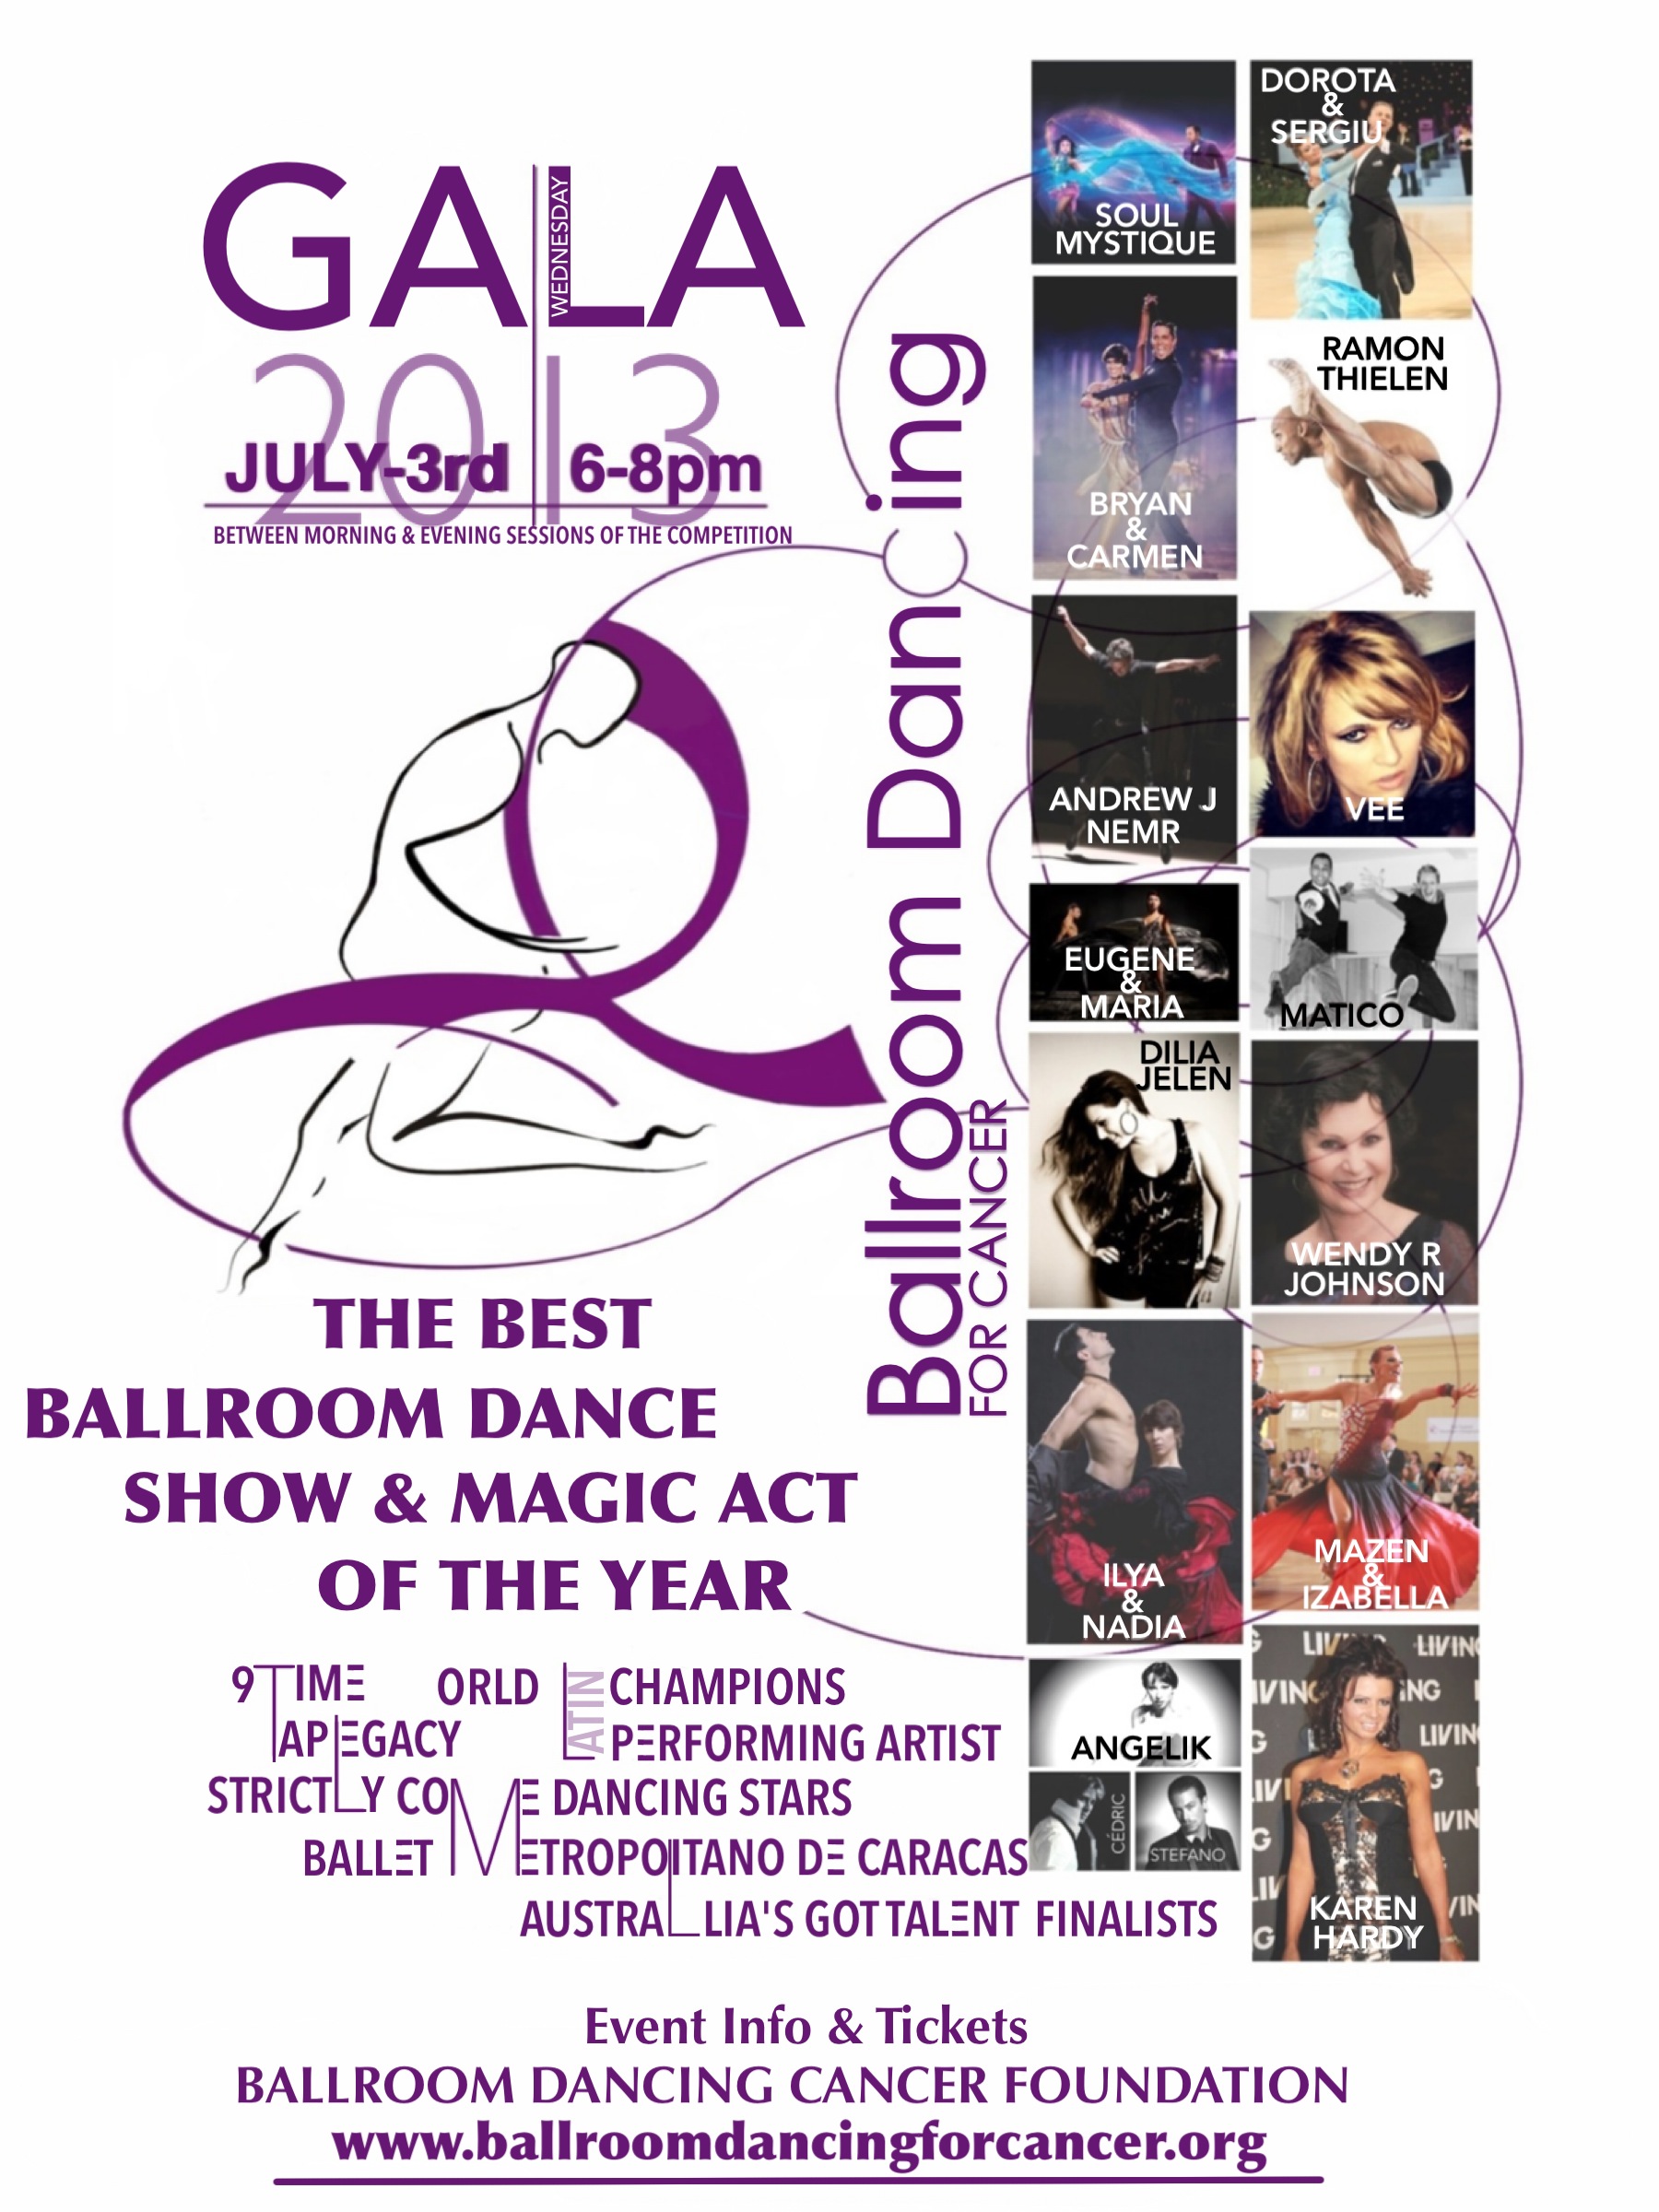 Ballroom Dancing Cancer Foundation 2013 GALA